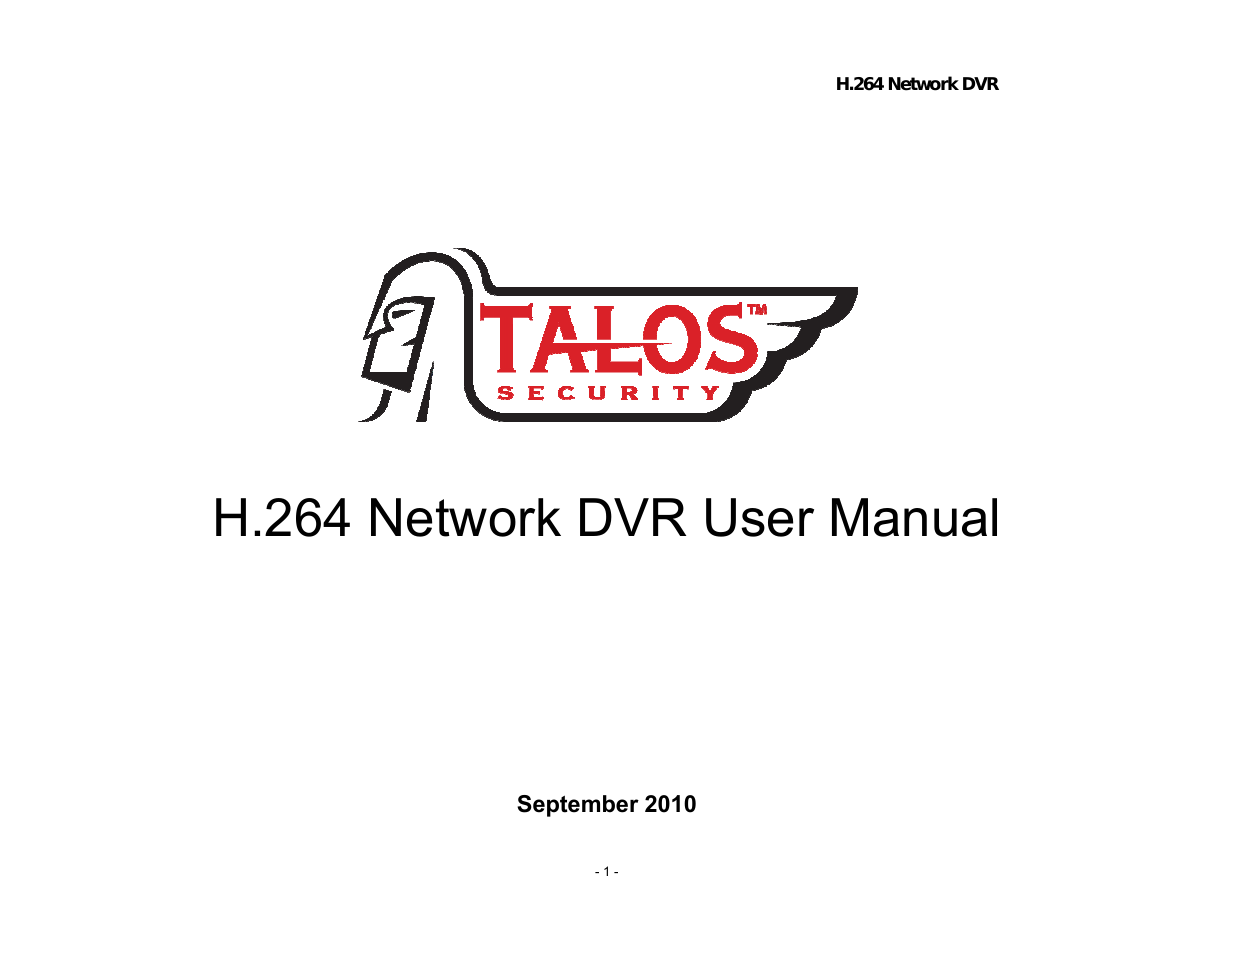 DR800 Series DVR User Manual